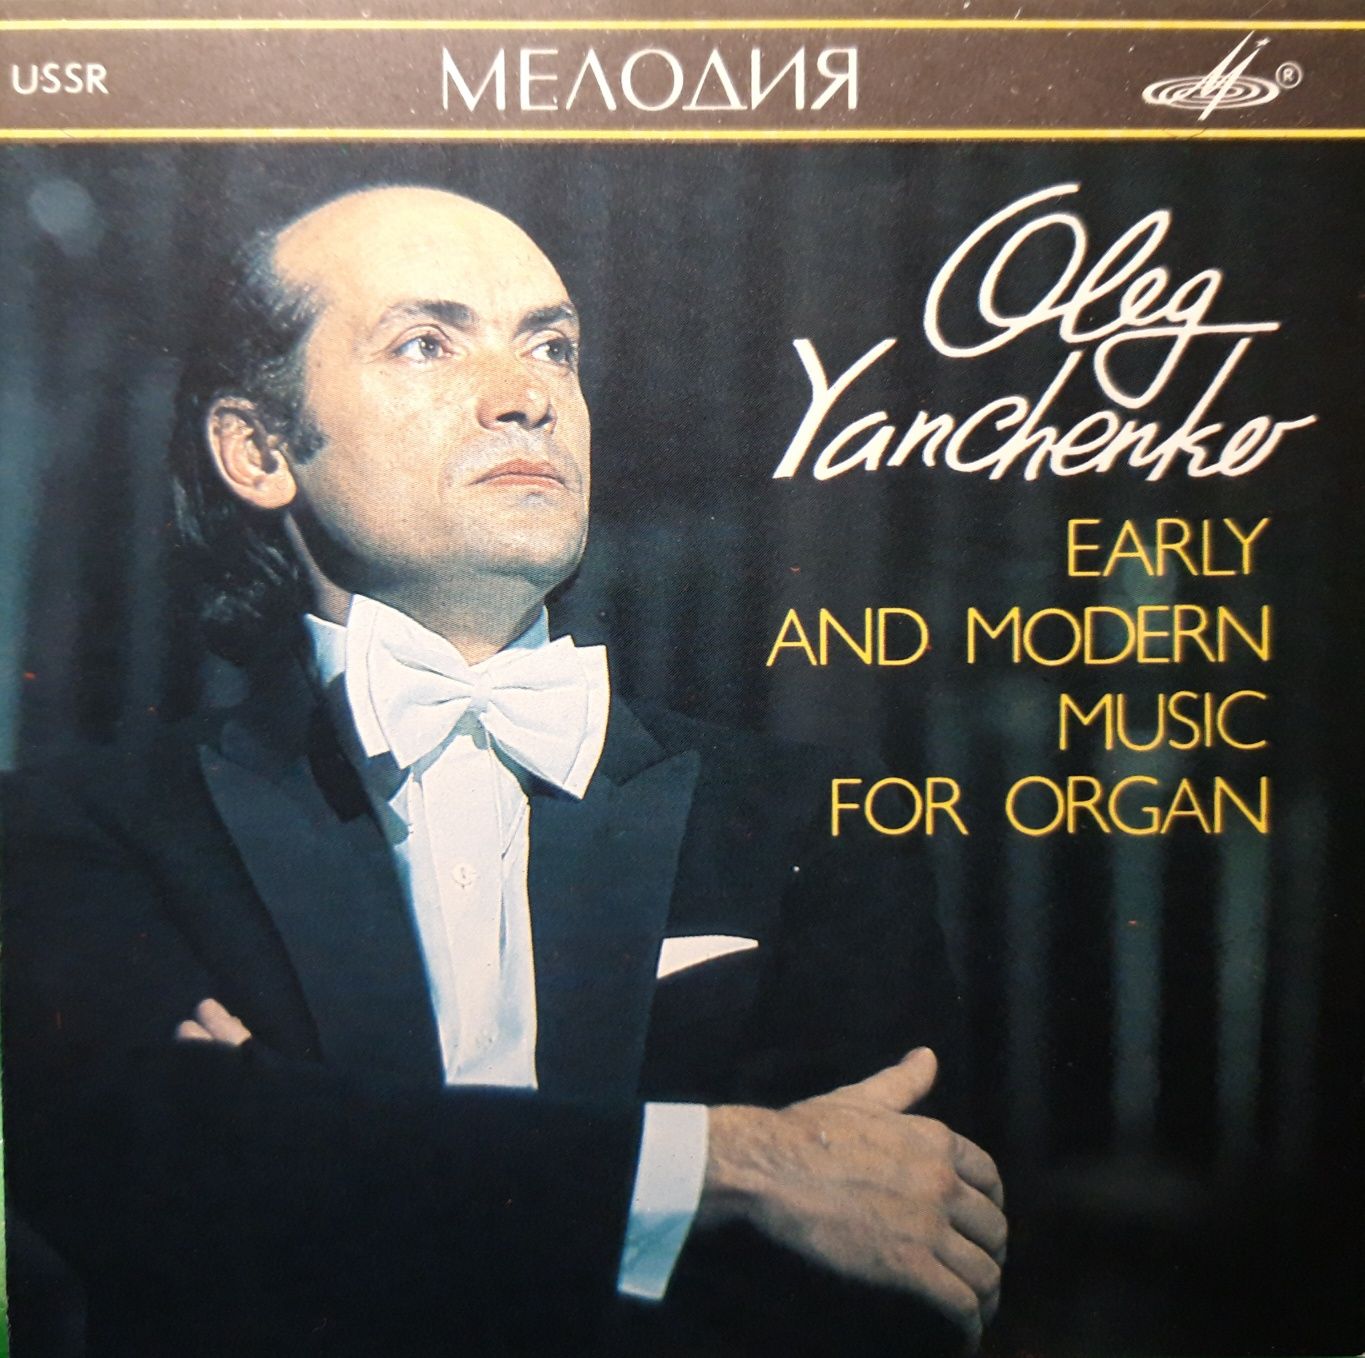 Oleg Yanchenko - Early And Modern Music For Organ (CD, 1988)